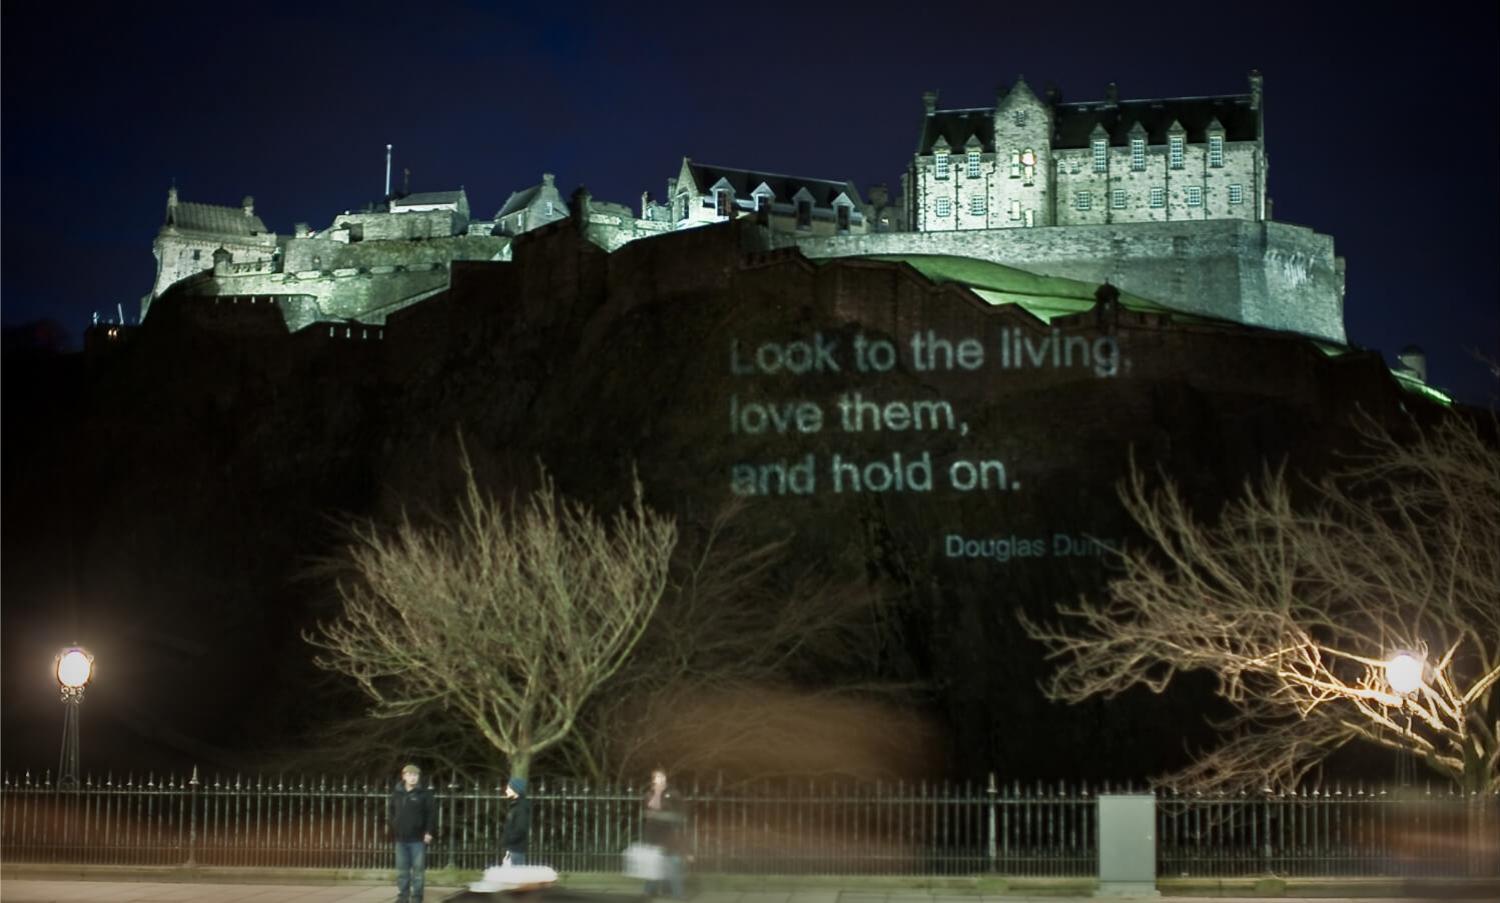 A Poetry Project on Edinburgh Castle - City of Literature. Photo by Chris Scott- 